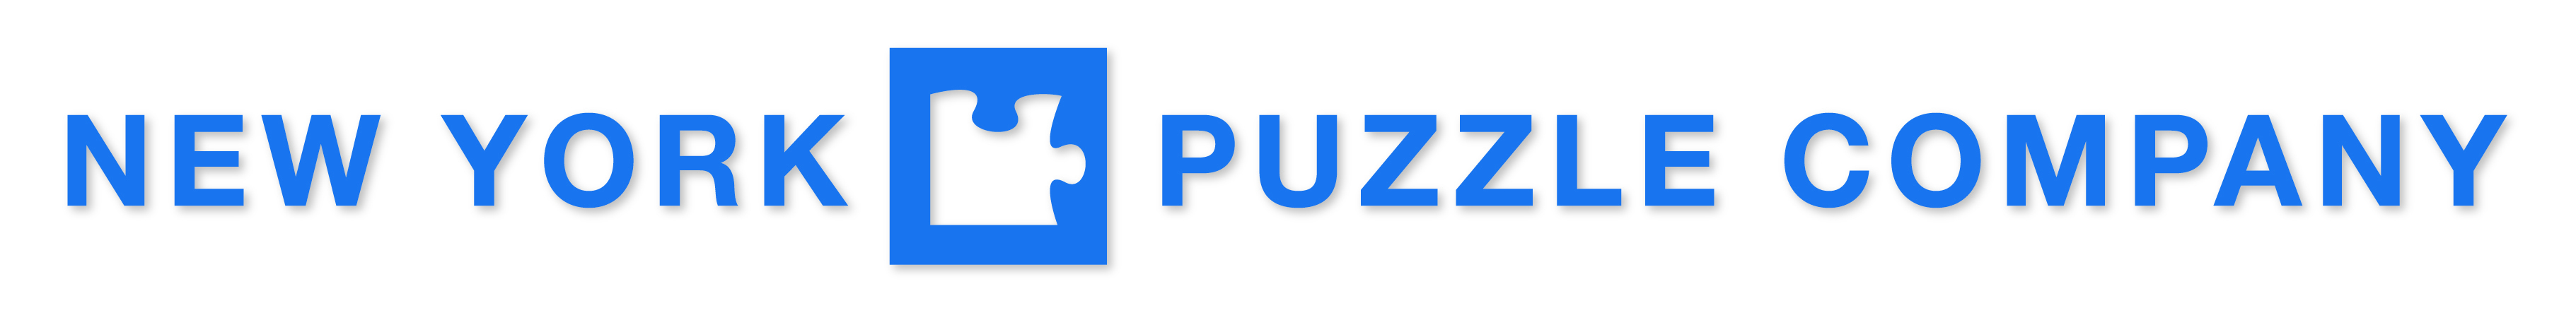 New York Puzzle Company